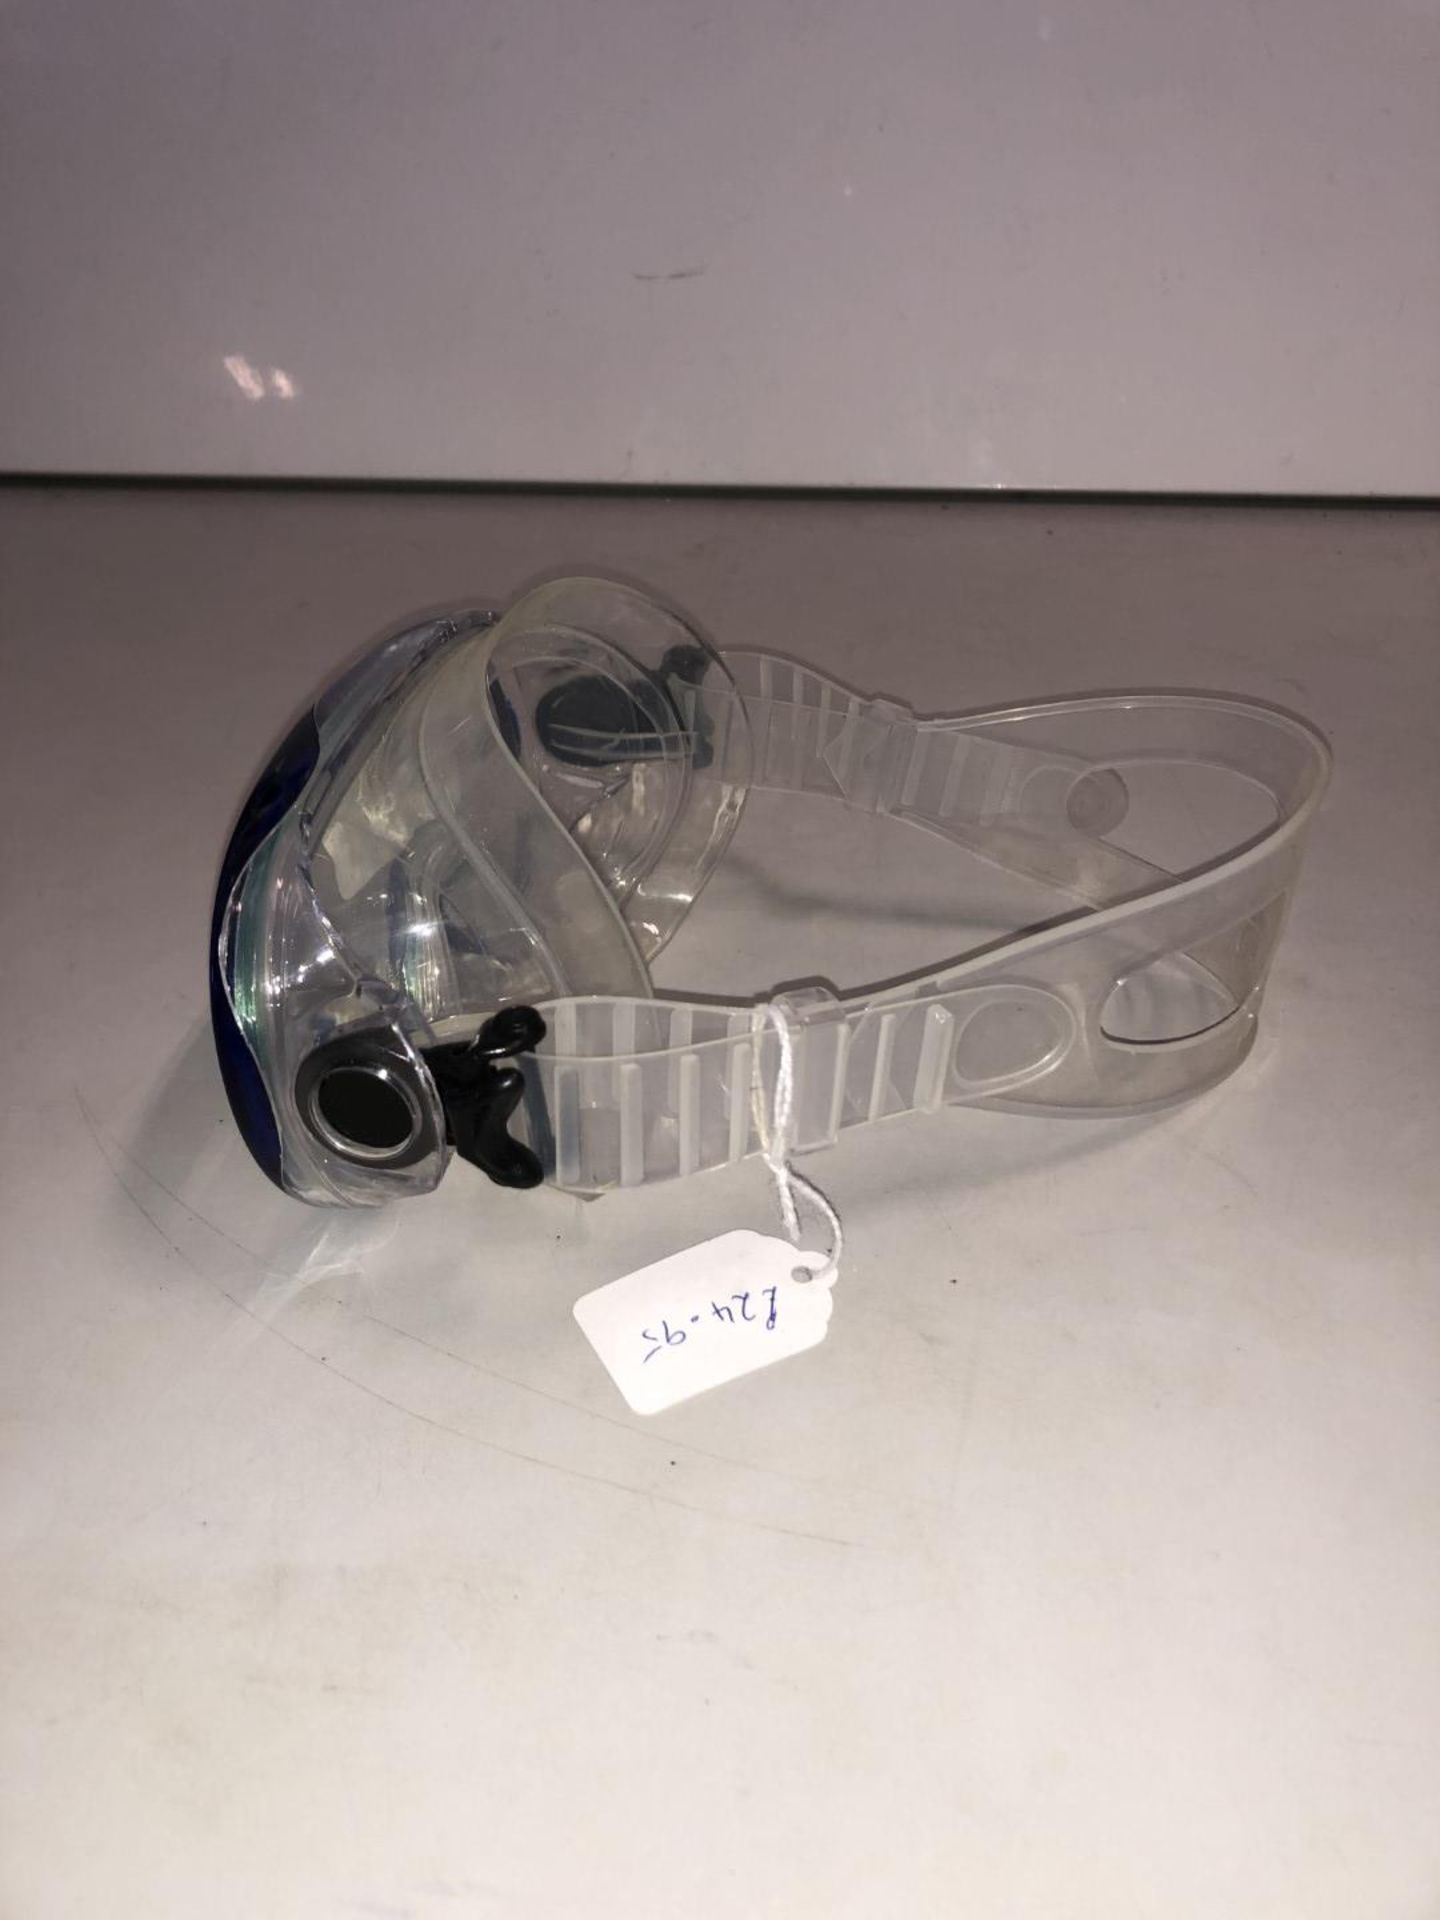 10 x New Adult Scuba Masks - CL349 - Altrincham WA14 - Image 18 of 25